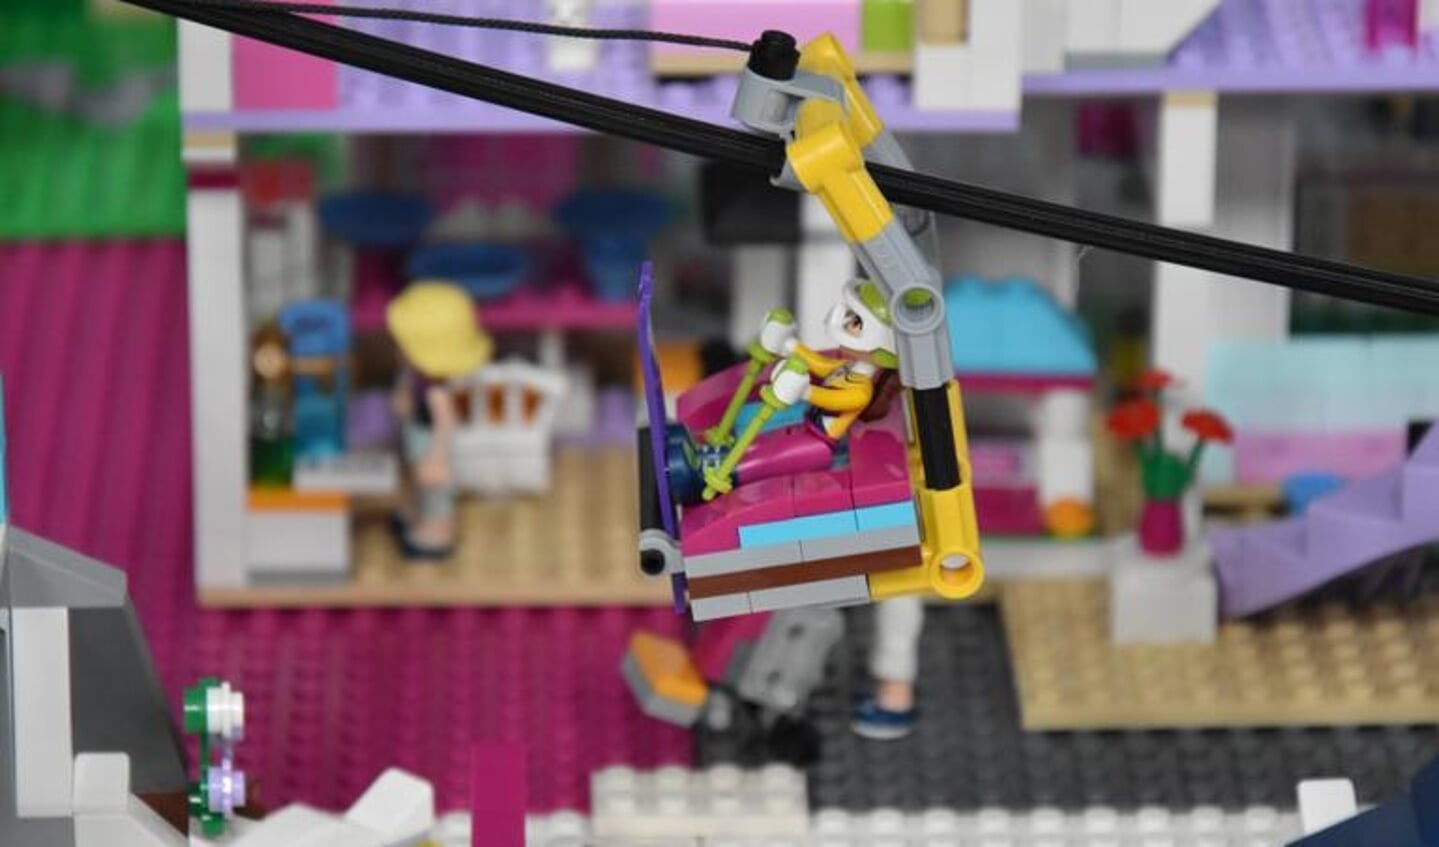 Nu al effectief Verfrissend Tiende editie LEGO-dag 'supergeslaagd'